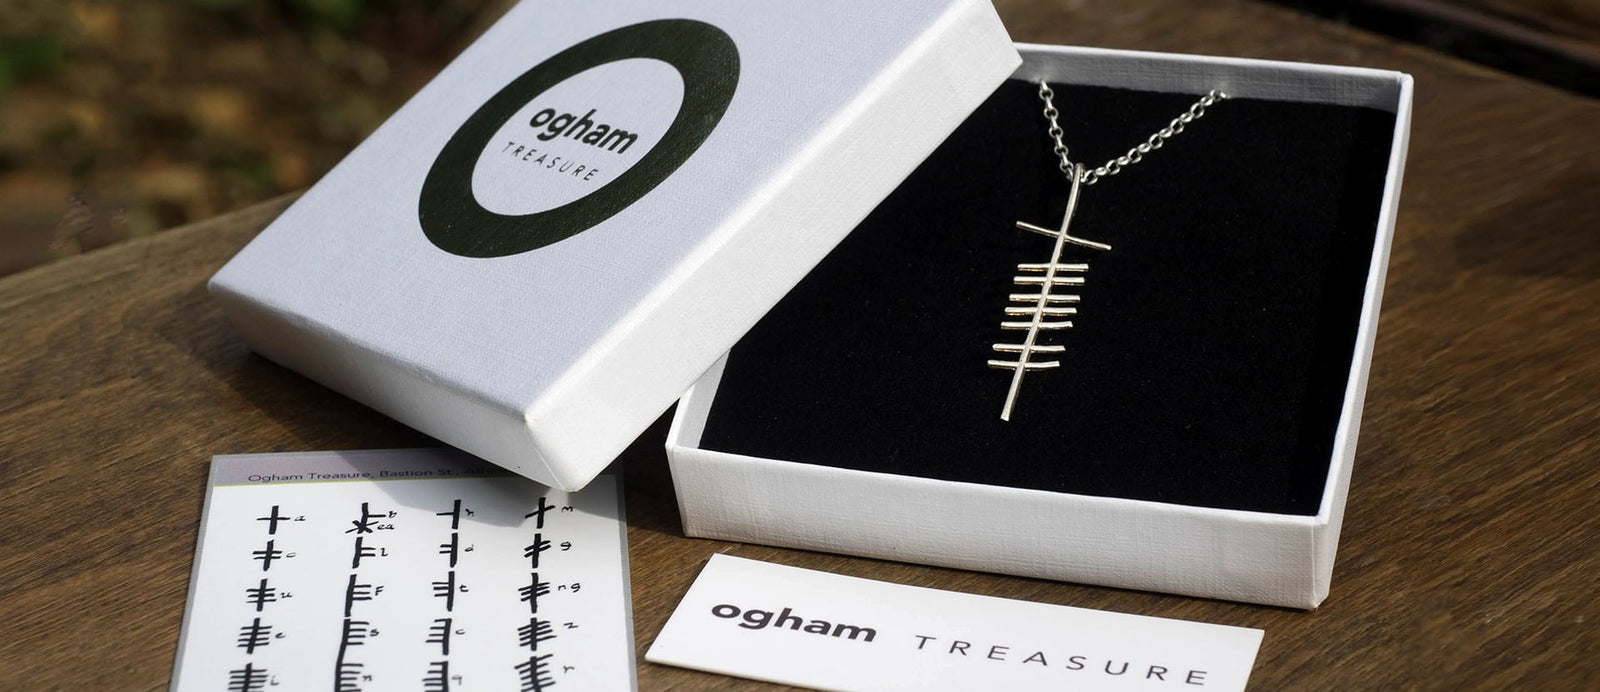 Skeleton Hands Necklace | Twenty One Pilots Official Store